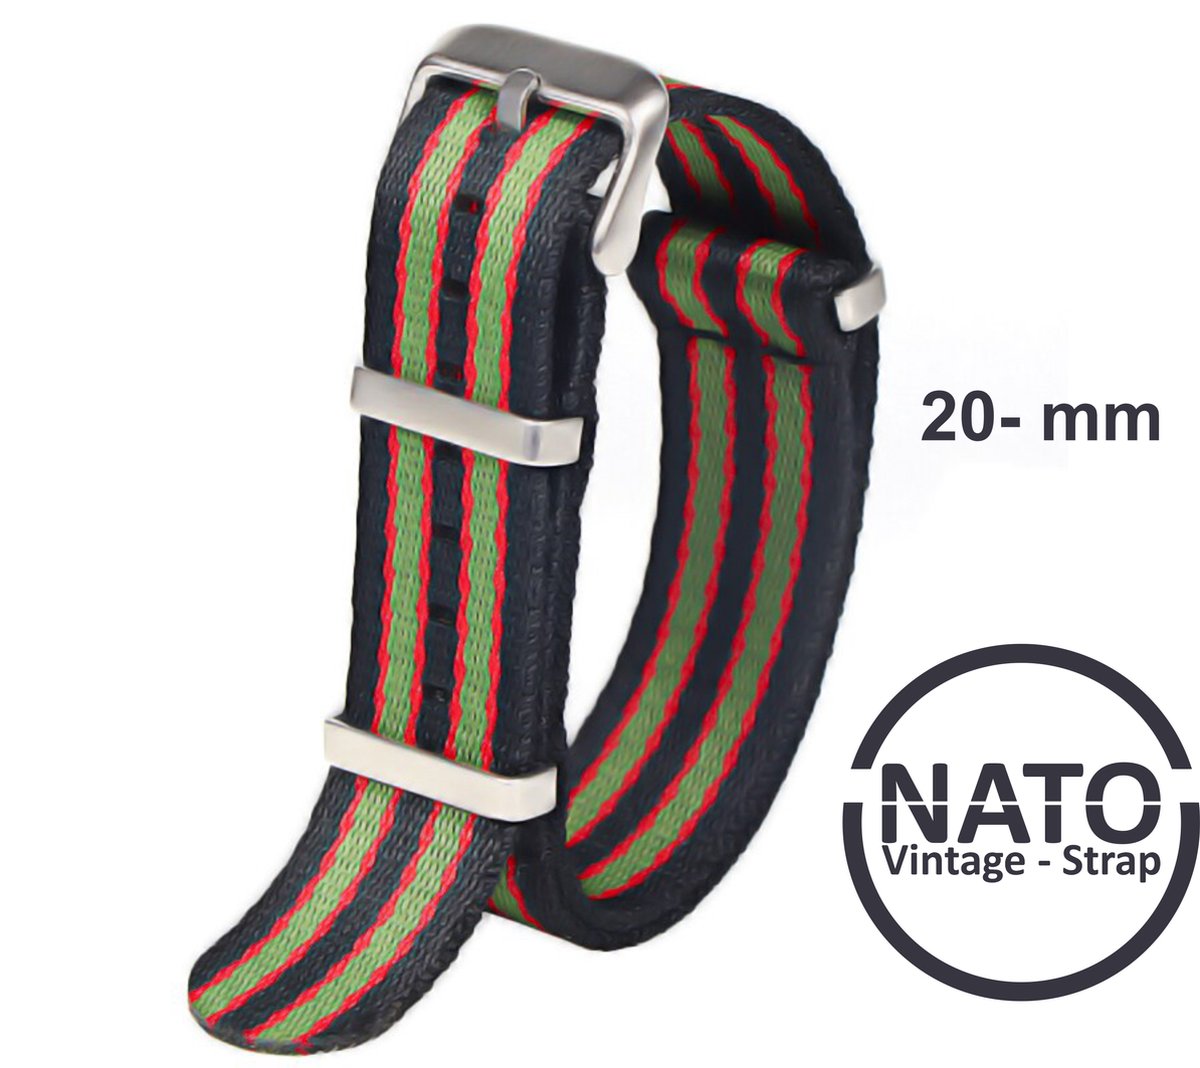 20mm Nato Strap Groen Rood Zwart gestreept - Vintage James Bond - Nato Strap collectie - Mannen - Horlogebanden - 20 mm bandbreedte